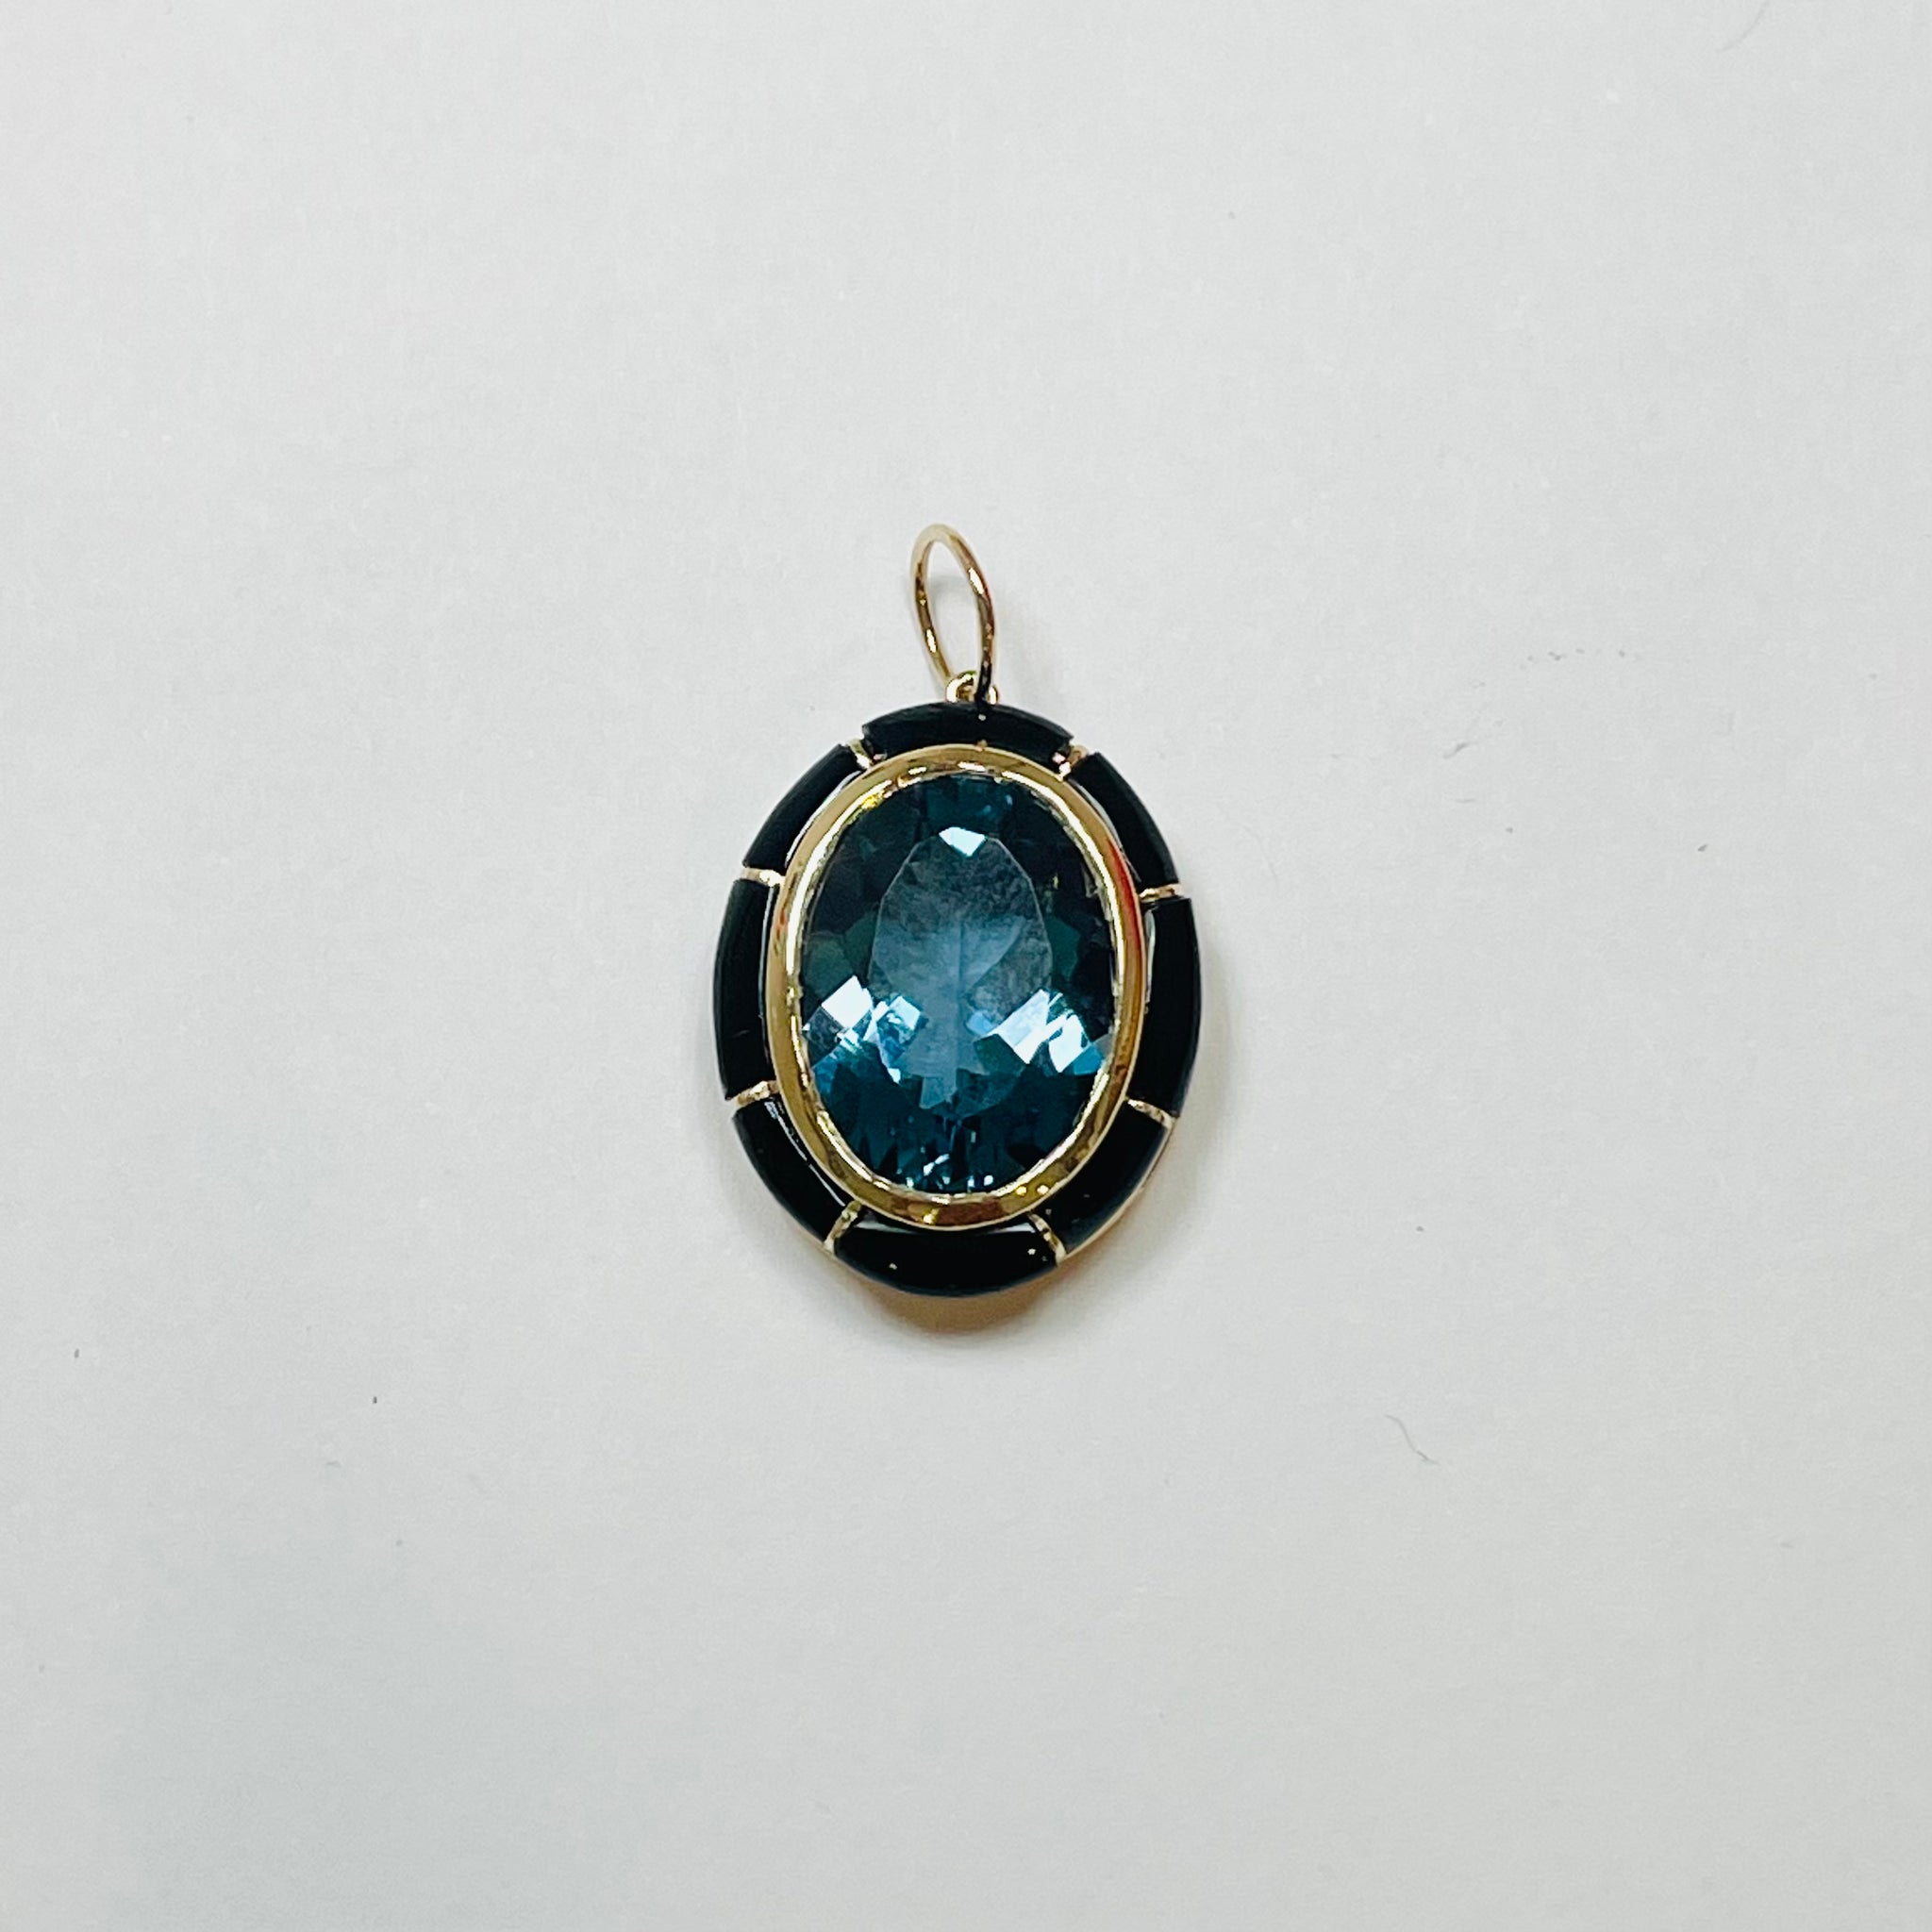 London blue topaz with black enamel pendant